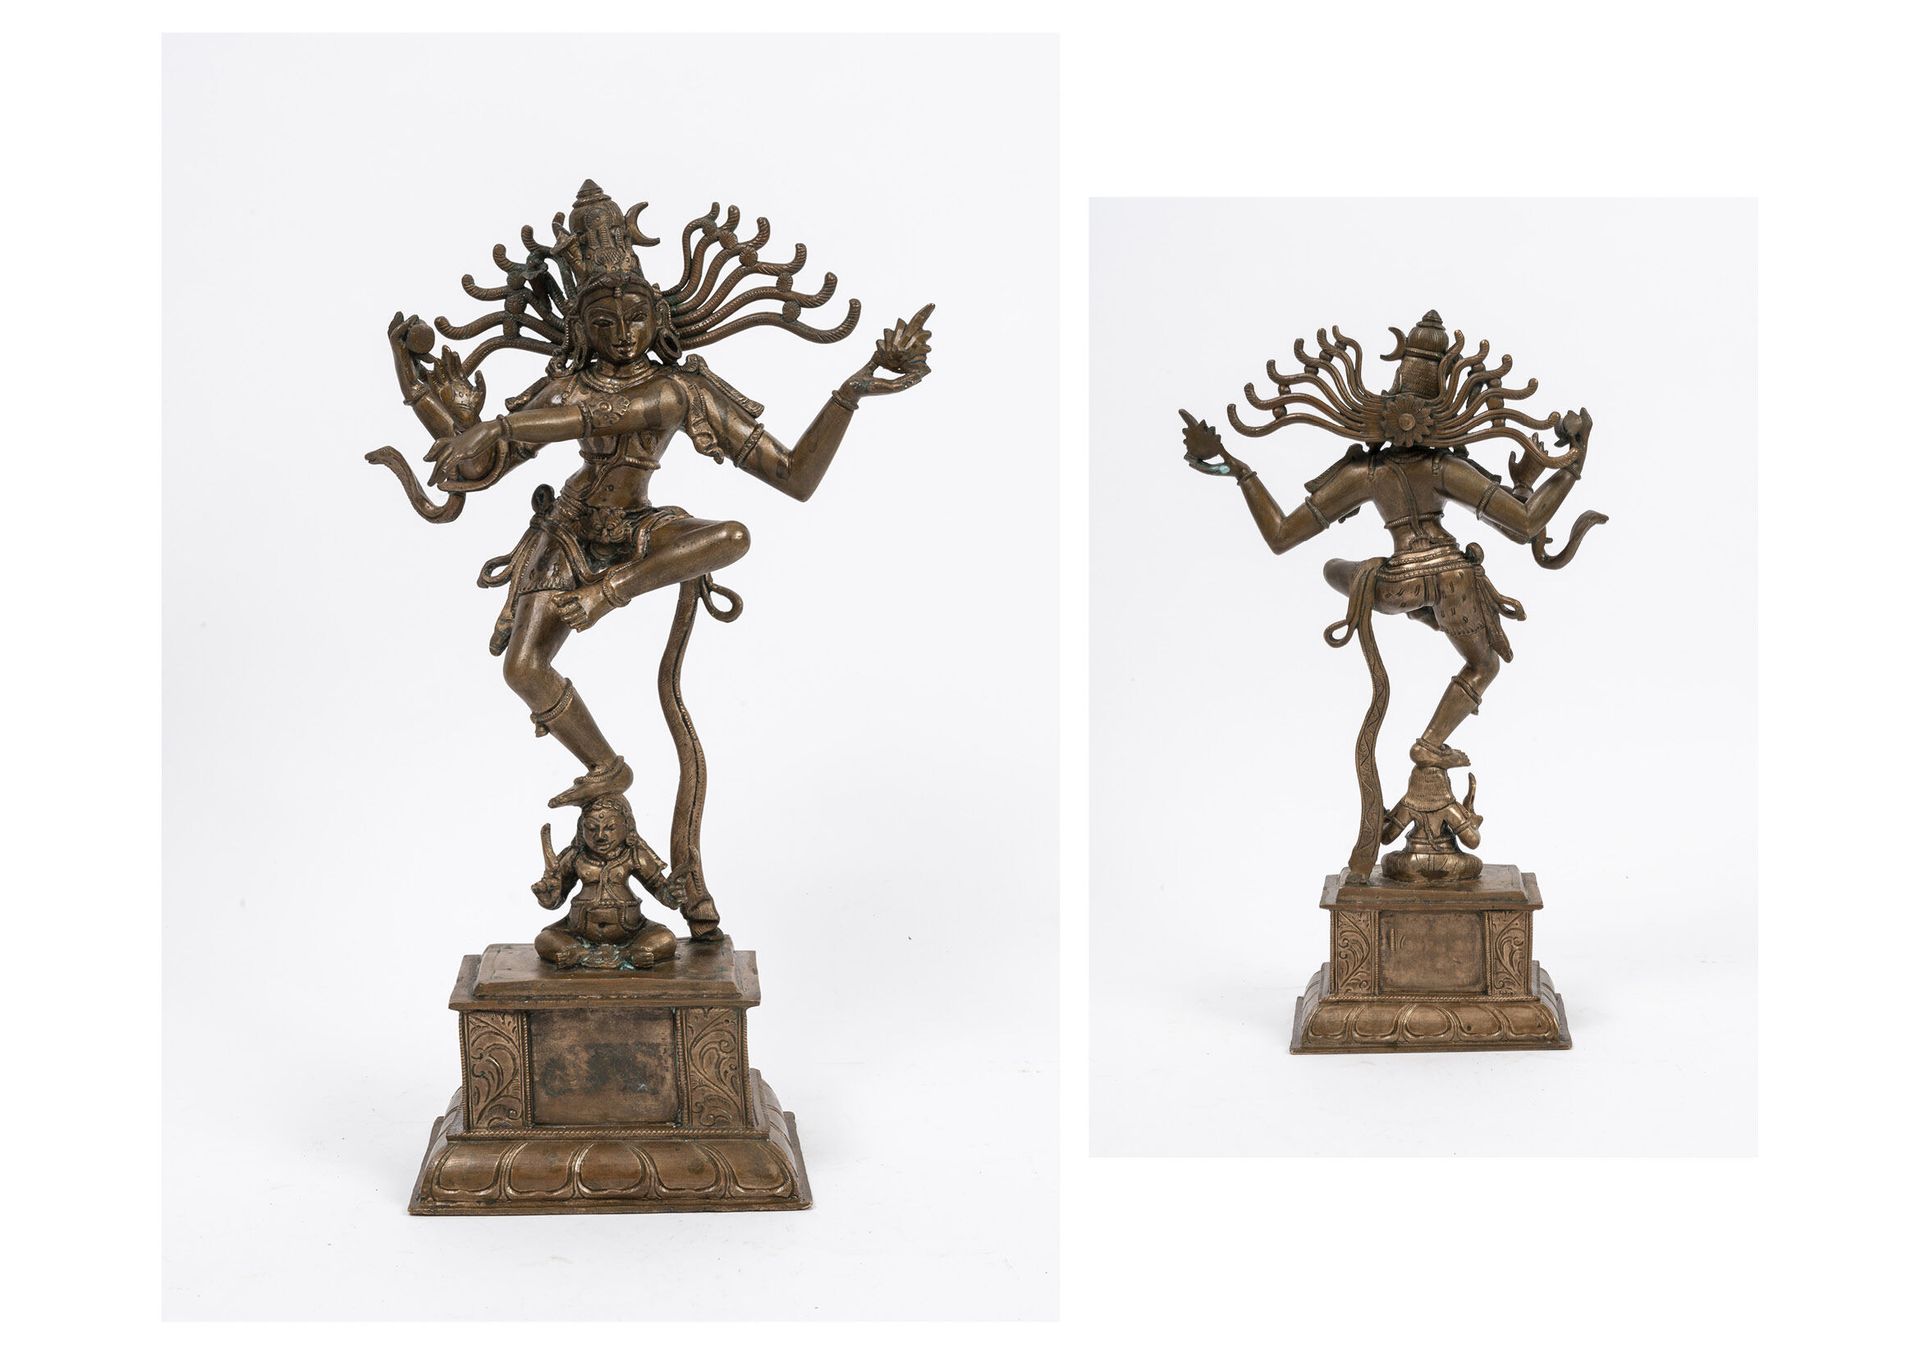 ASIE, XXème siècle - INDIA or THAILAND

Dancing deity in bronze. 

H. 38 cm.

We&hellip;